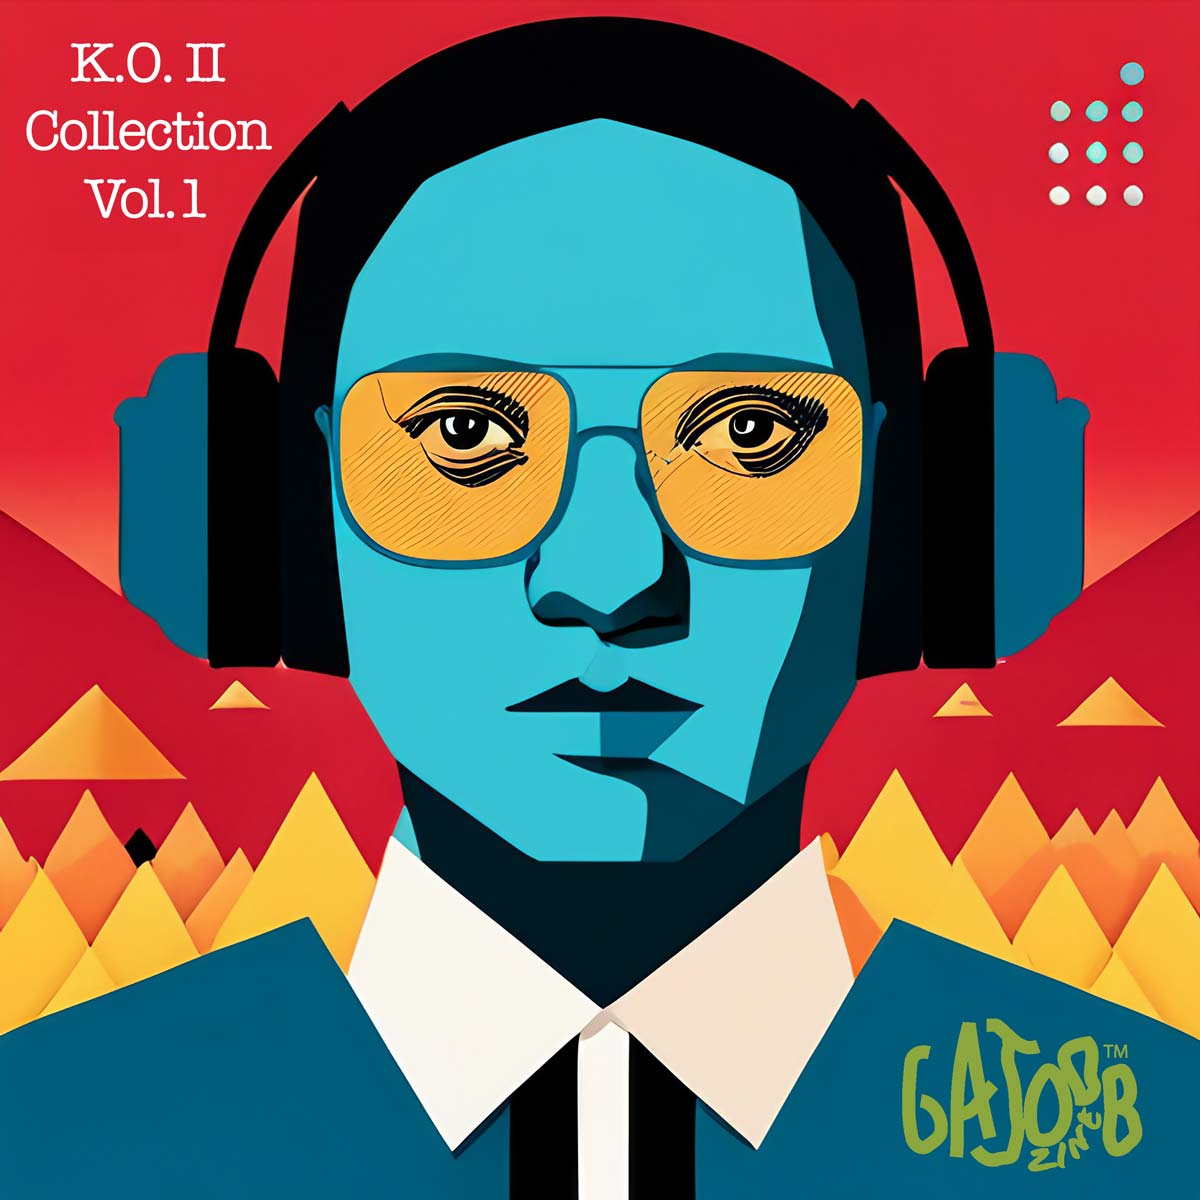 GAJOOB’s K.O. II Collection Vol.1